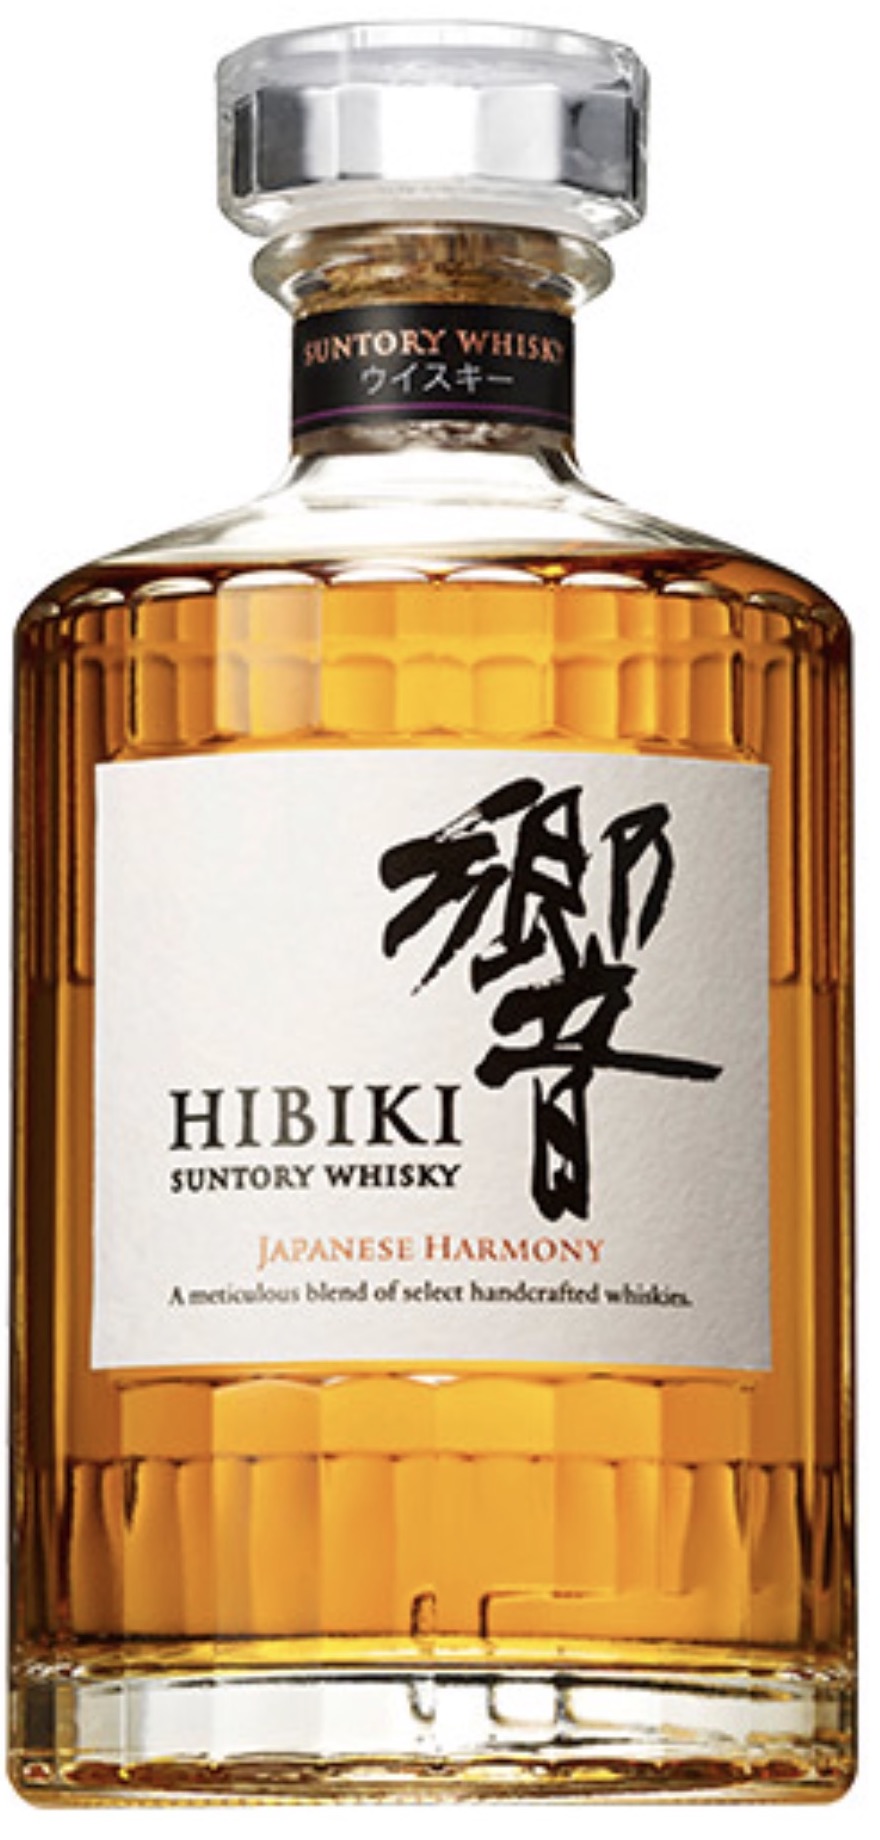 Hibiki Suntory Whisky Japanese Harmony Whisky 43 % vol. 0,7L